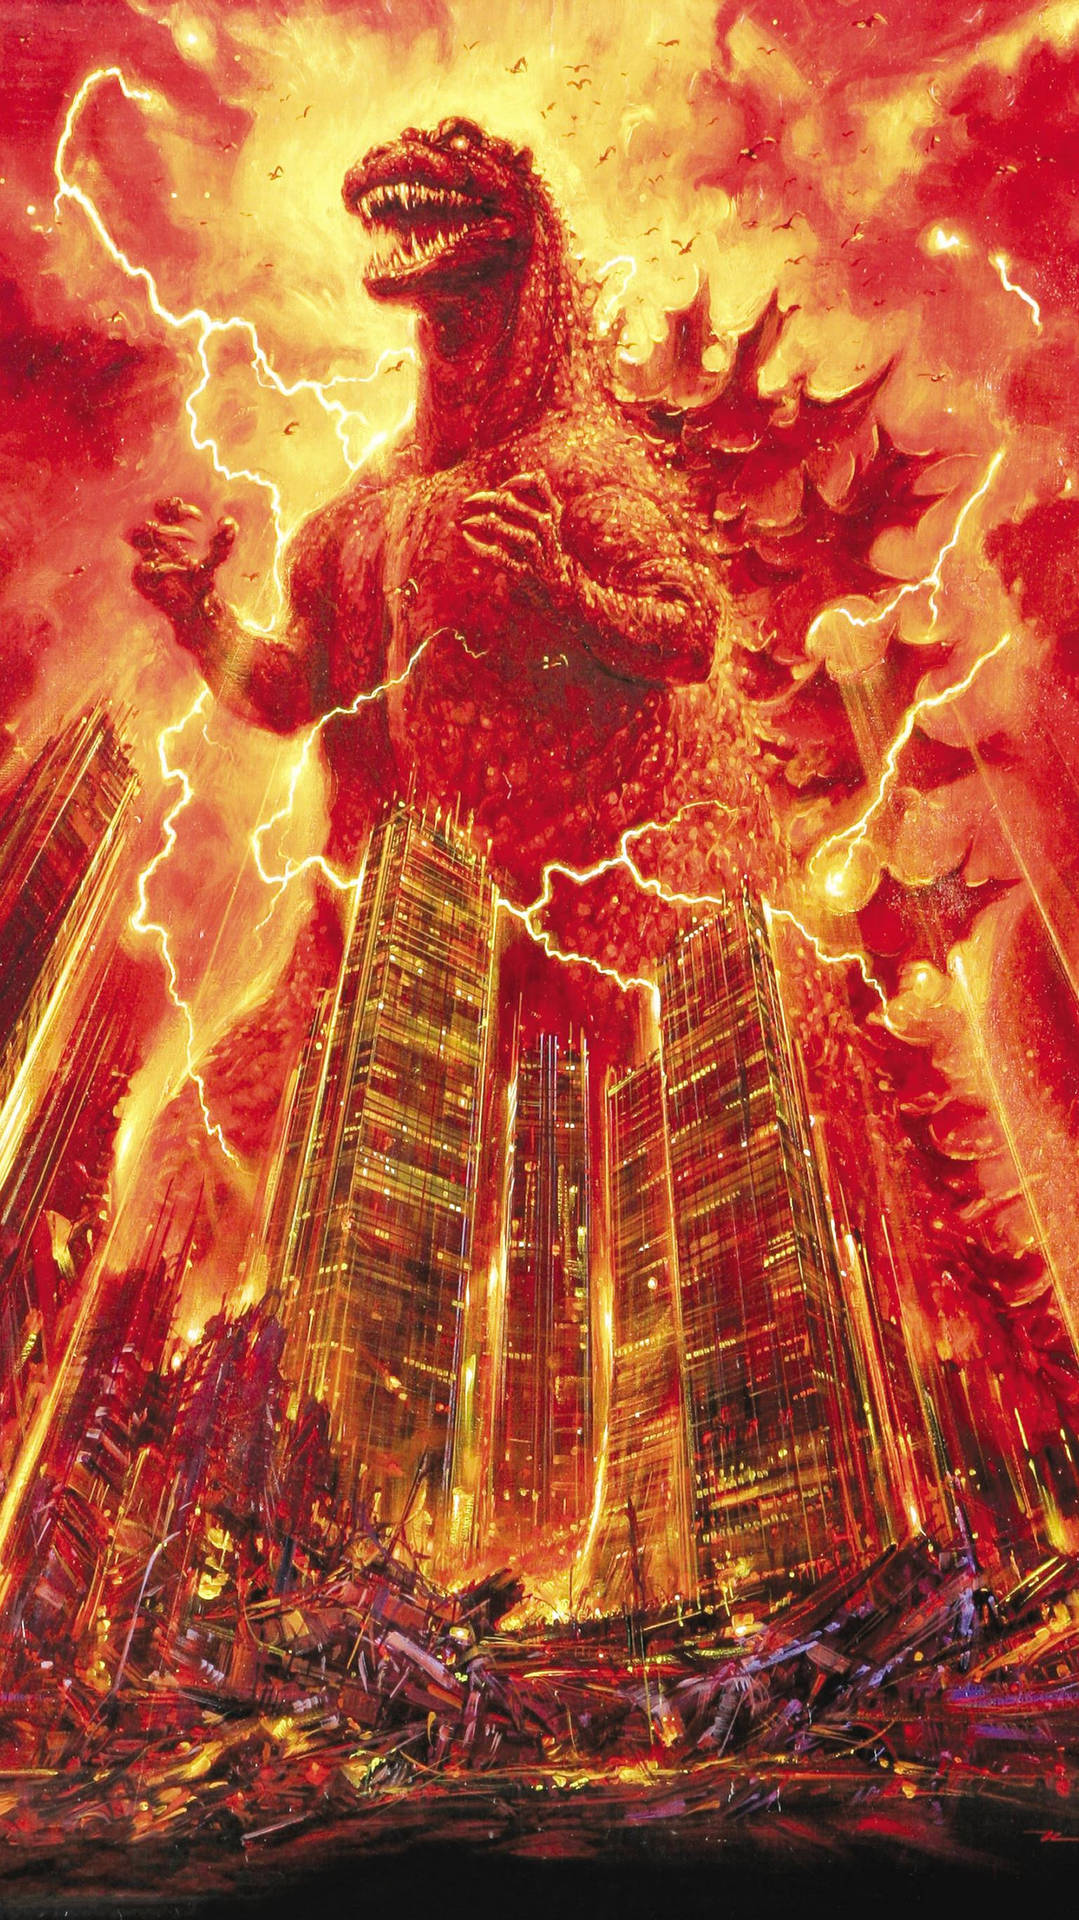 Emergiendode Las Profundidades - Shin Godzilla Fondo de pantalla